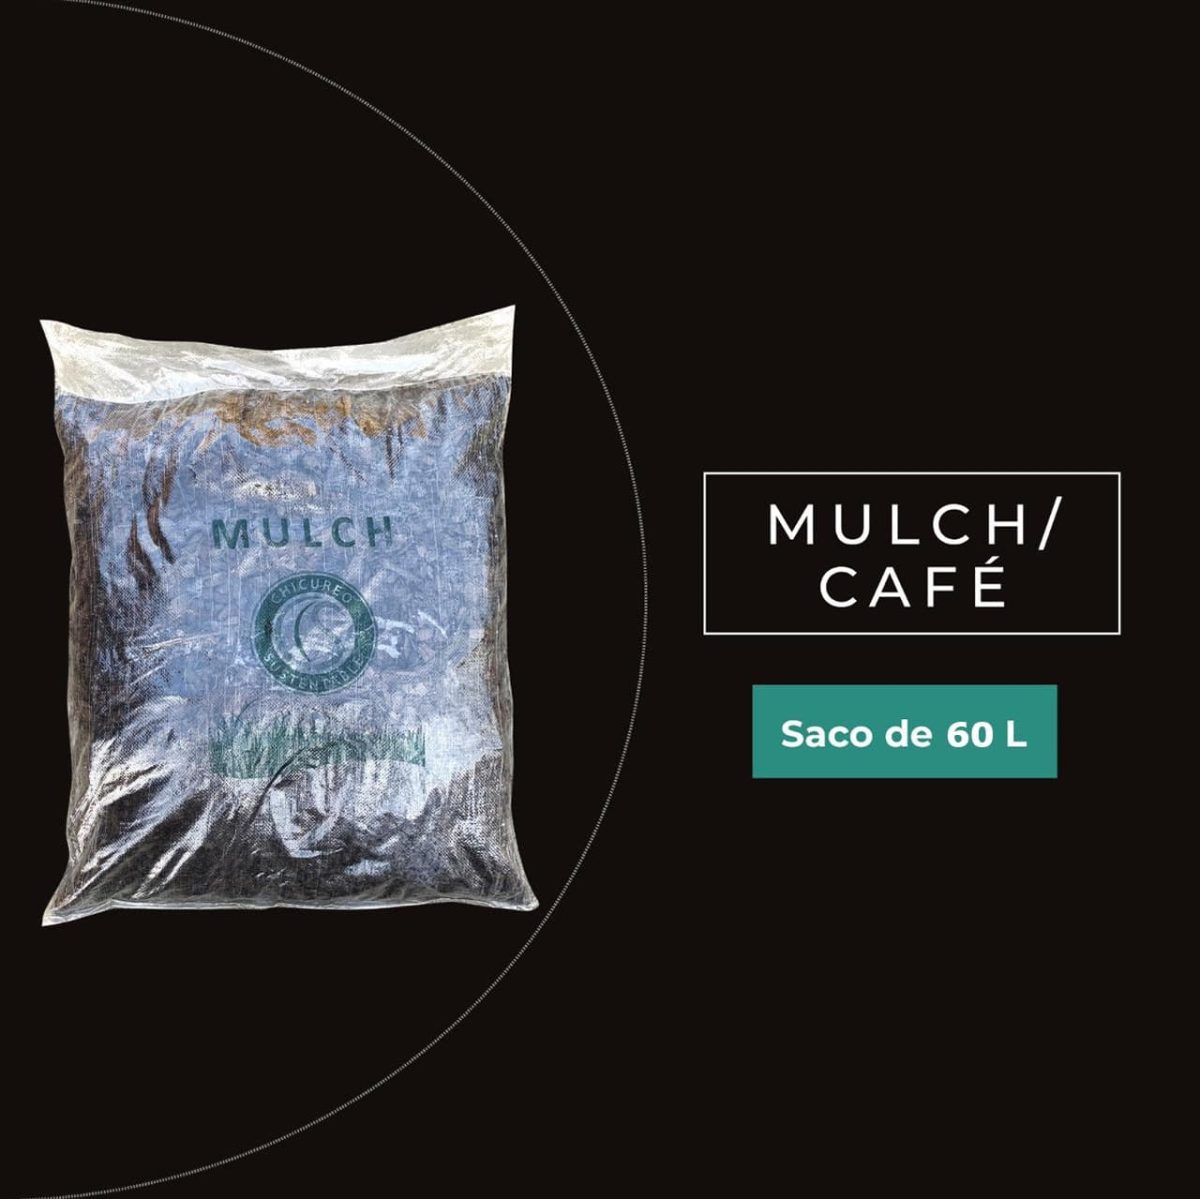 Mulch Café